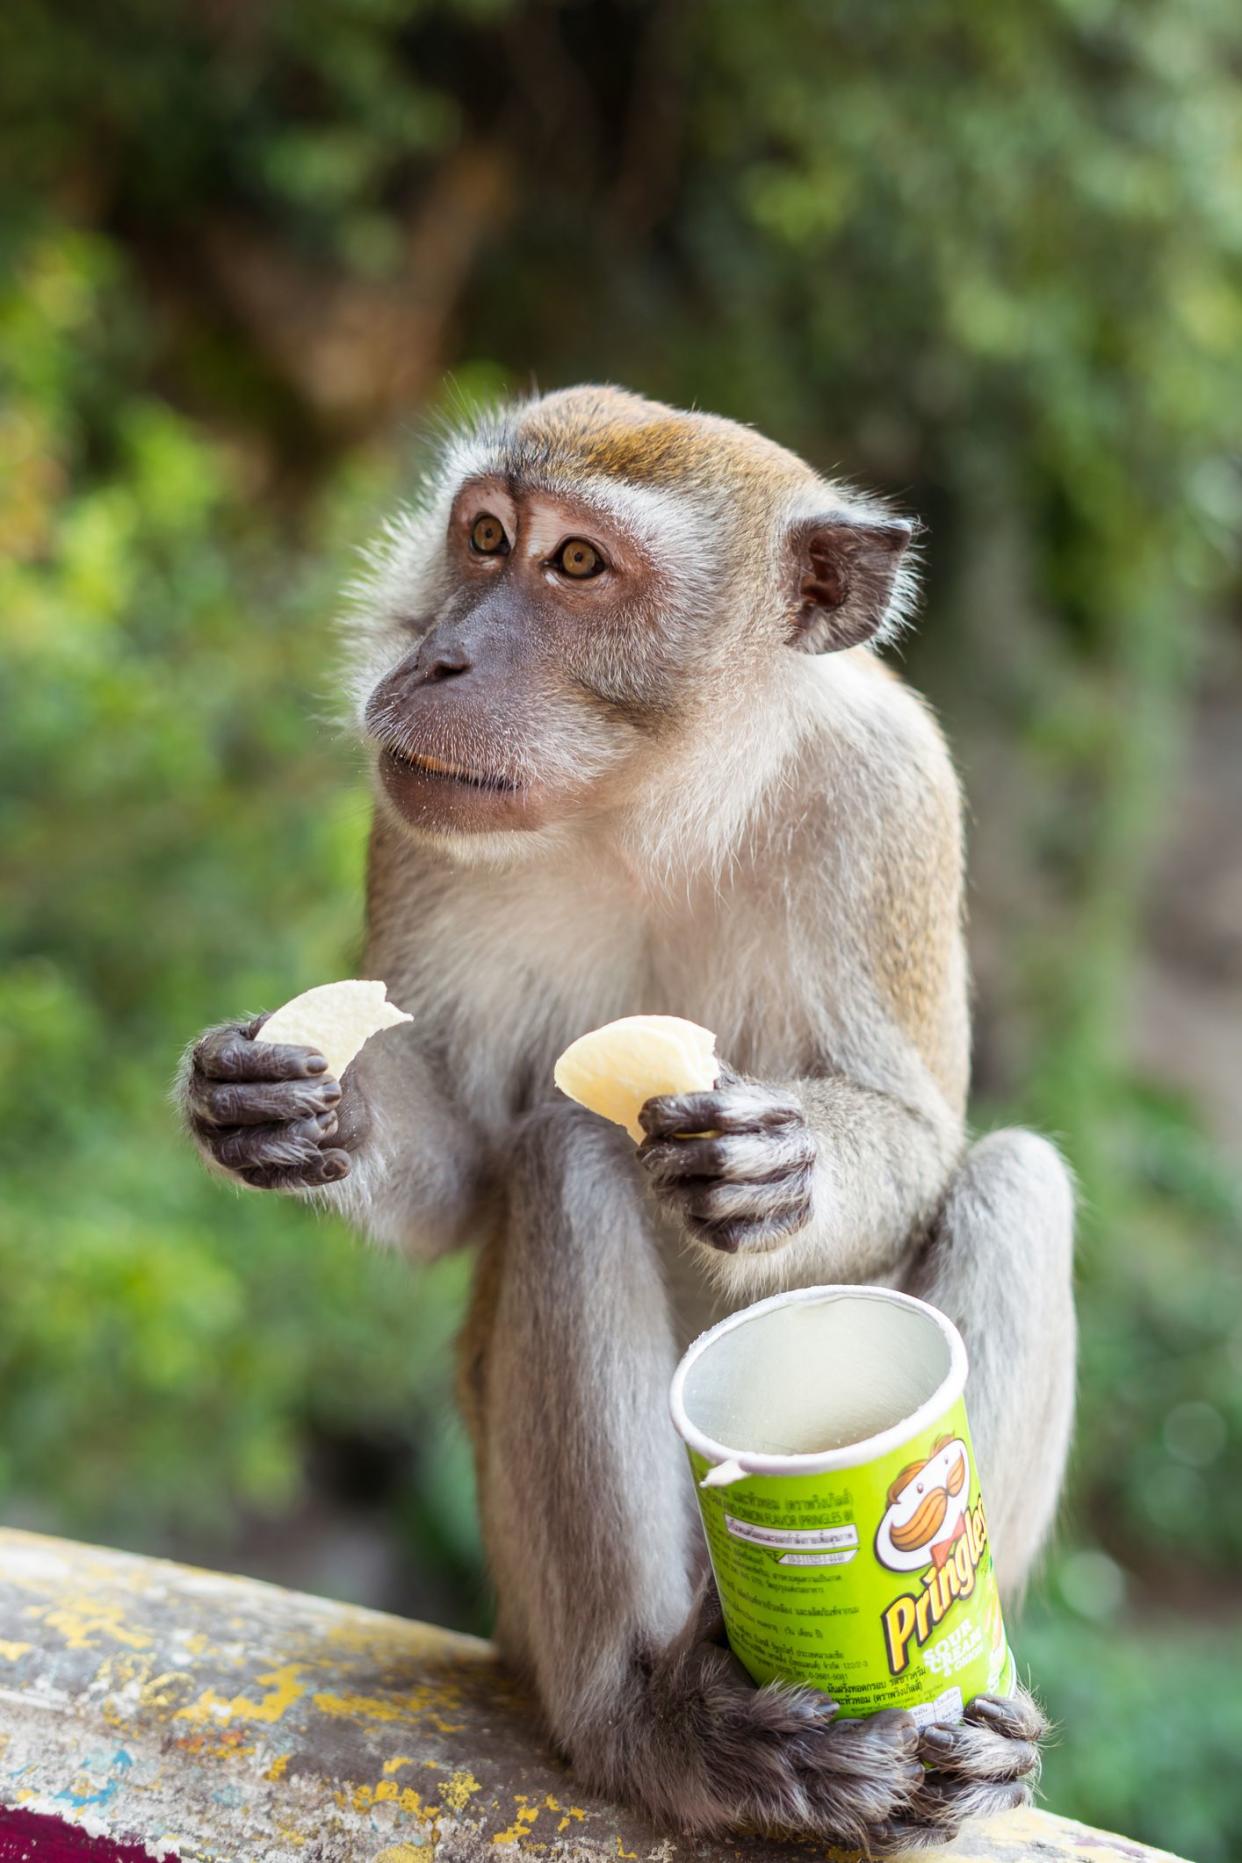 Kuala Lumpur / Malaysia - February 14, 2019: funny monkey eating potato chips from Pringles box at Batu Caves hindu temple